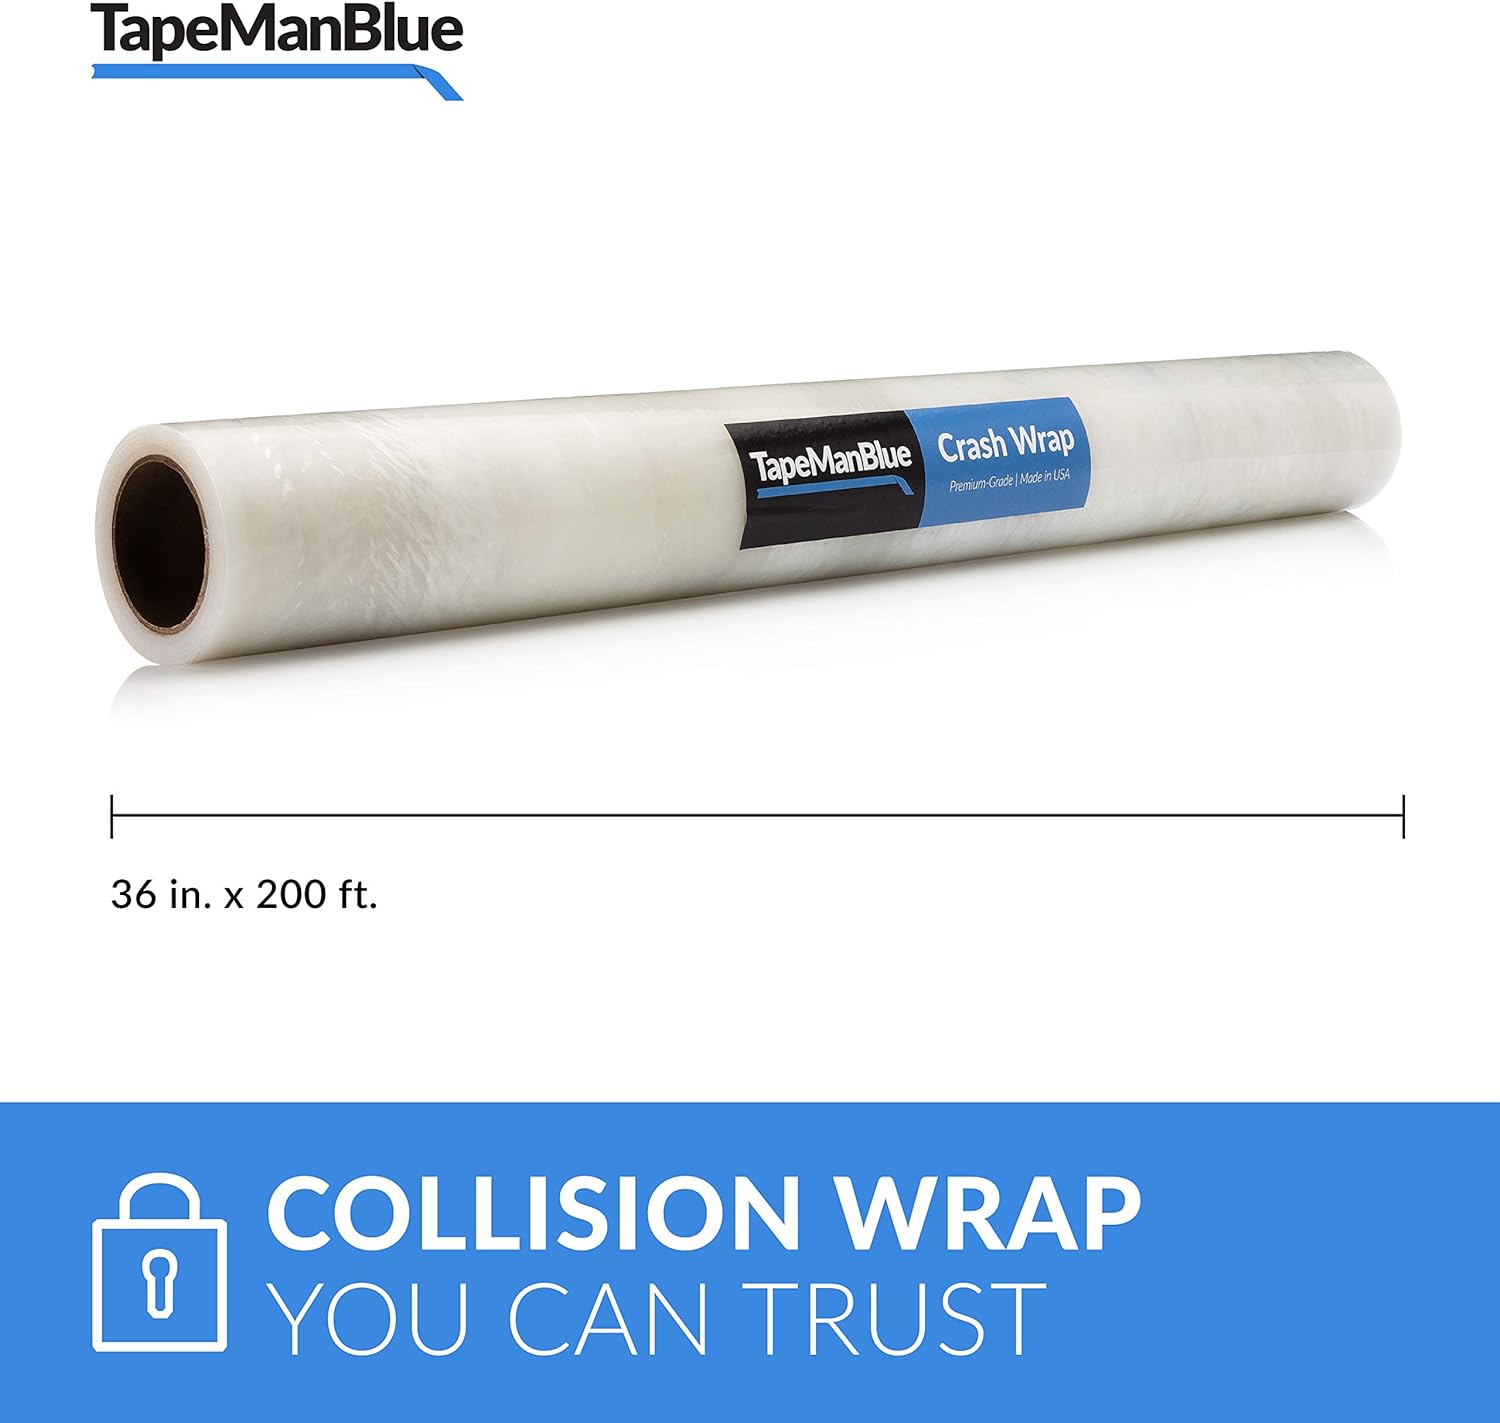 TapeManBlue Crash Wrap, 36 inch x 200 feet, Clear Collision Wrap for Cars